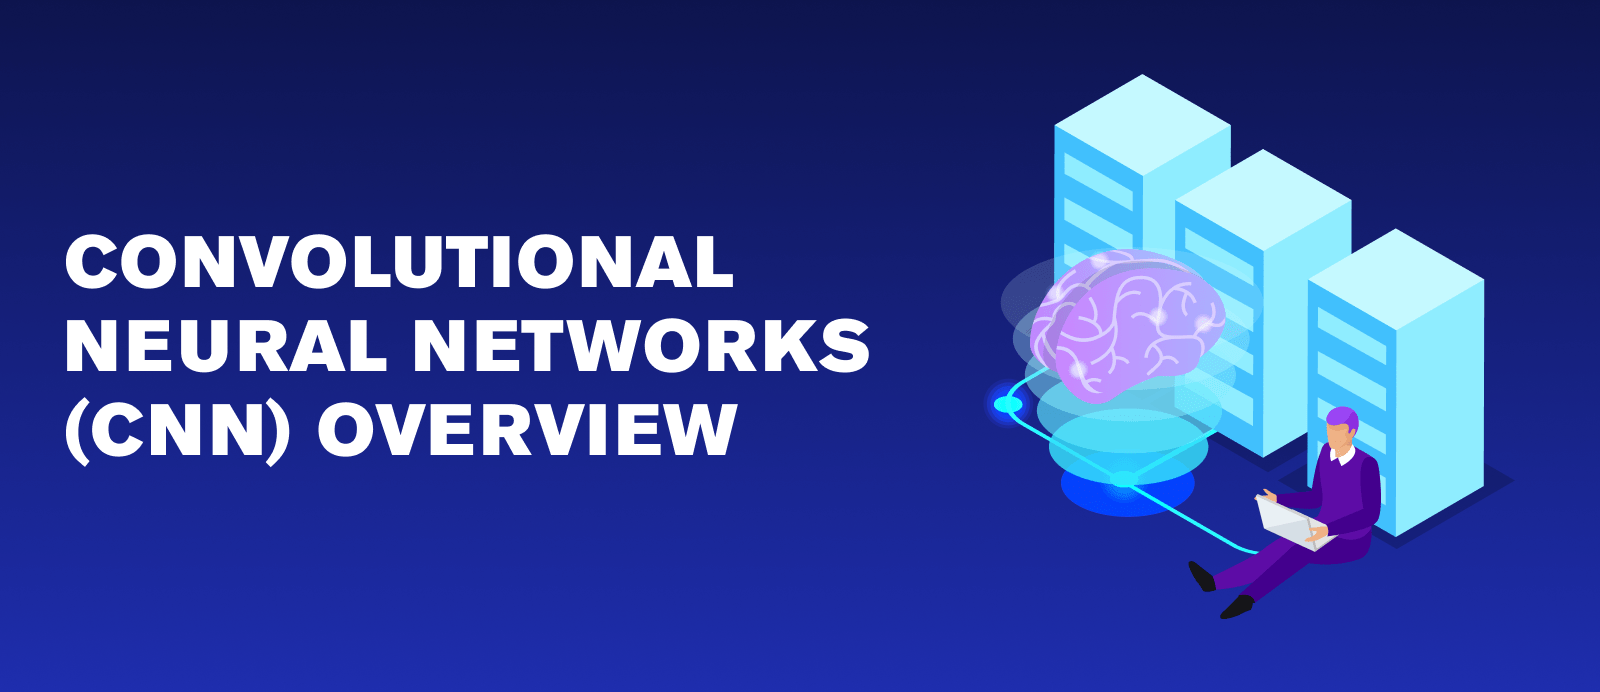 Convolutional Neural Networks (CNN) overview